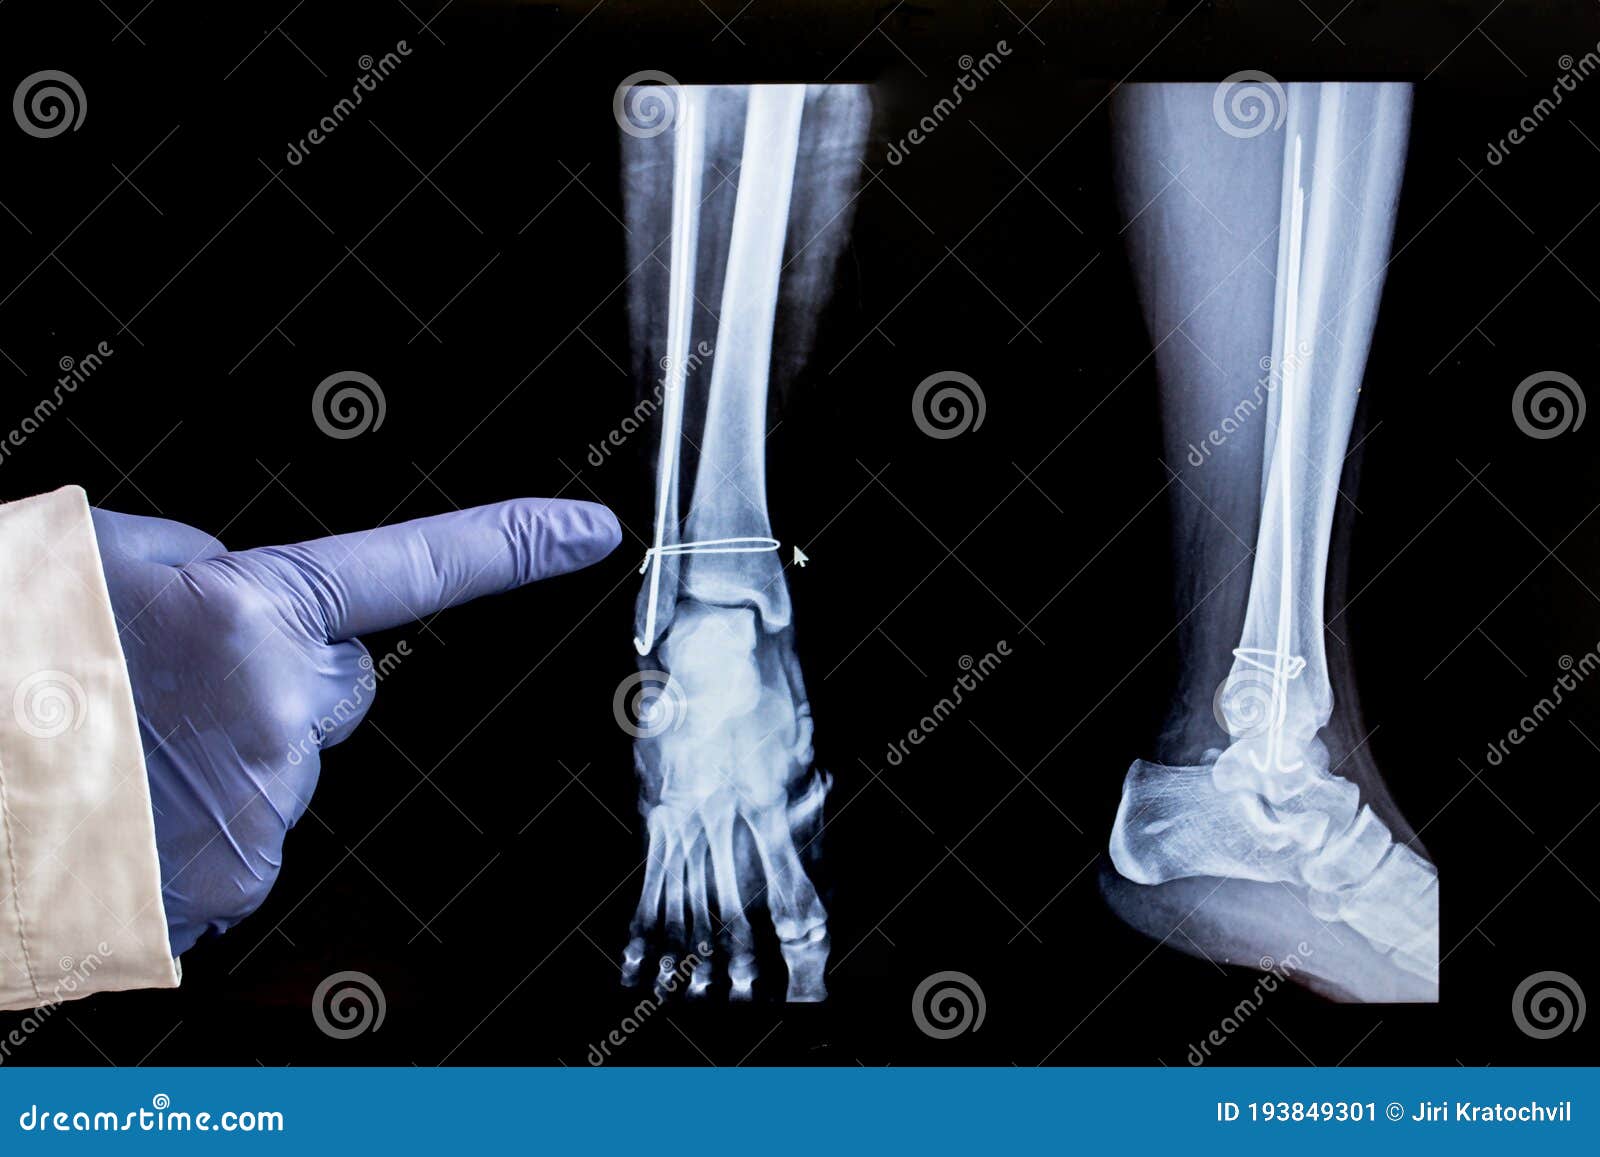 Ubrugelig Afledning hårdtarbejdende X-ray of the Leg after Surgery Stock Image - Image of isolated, bone:  193849301